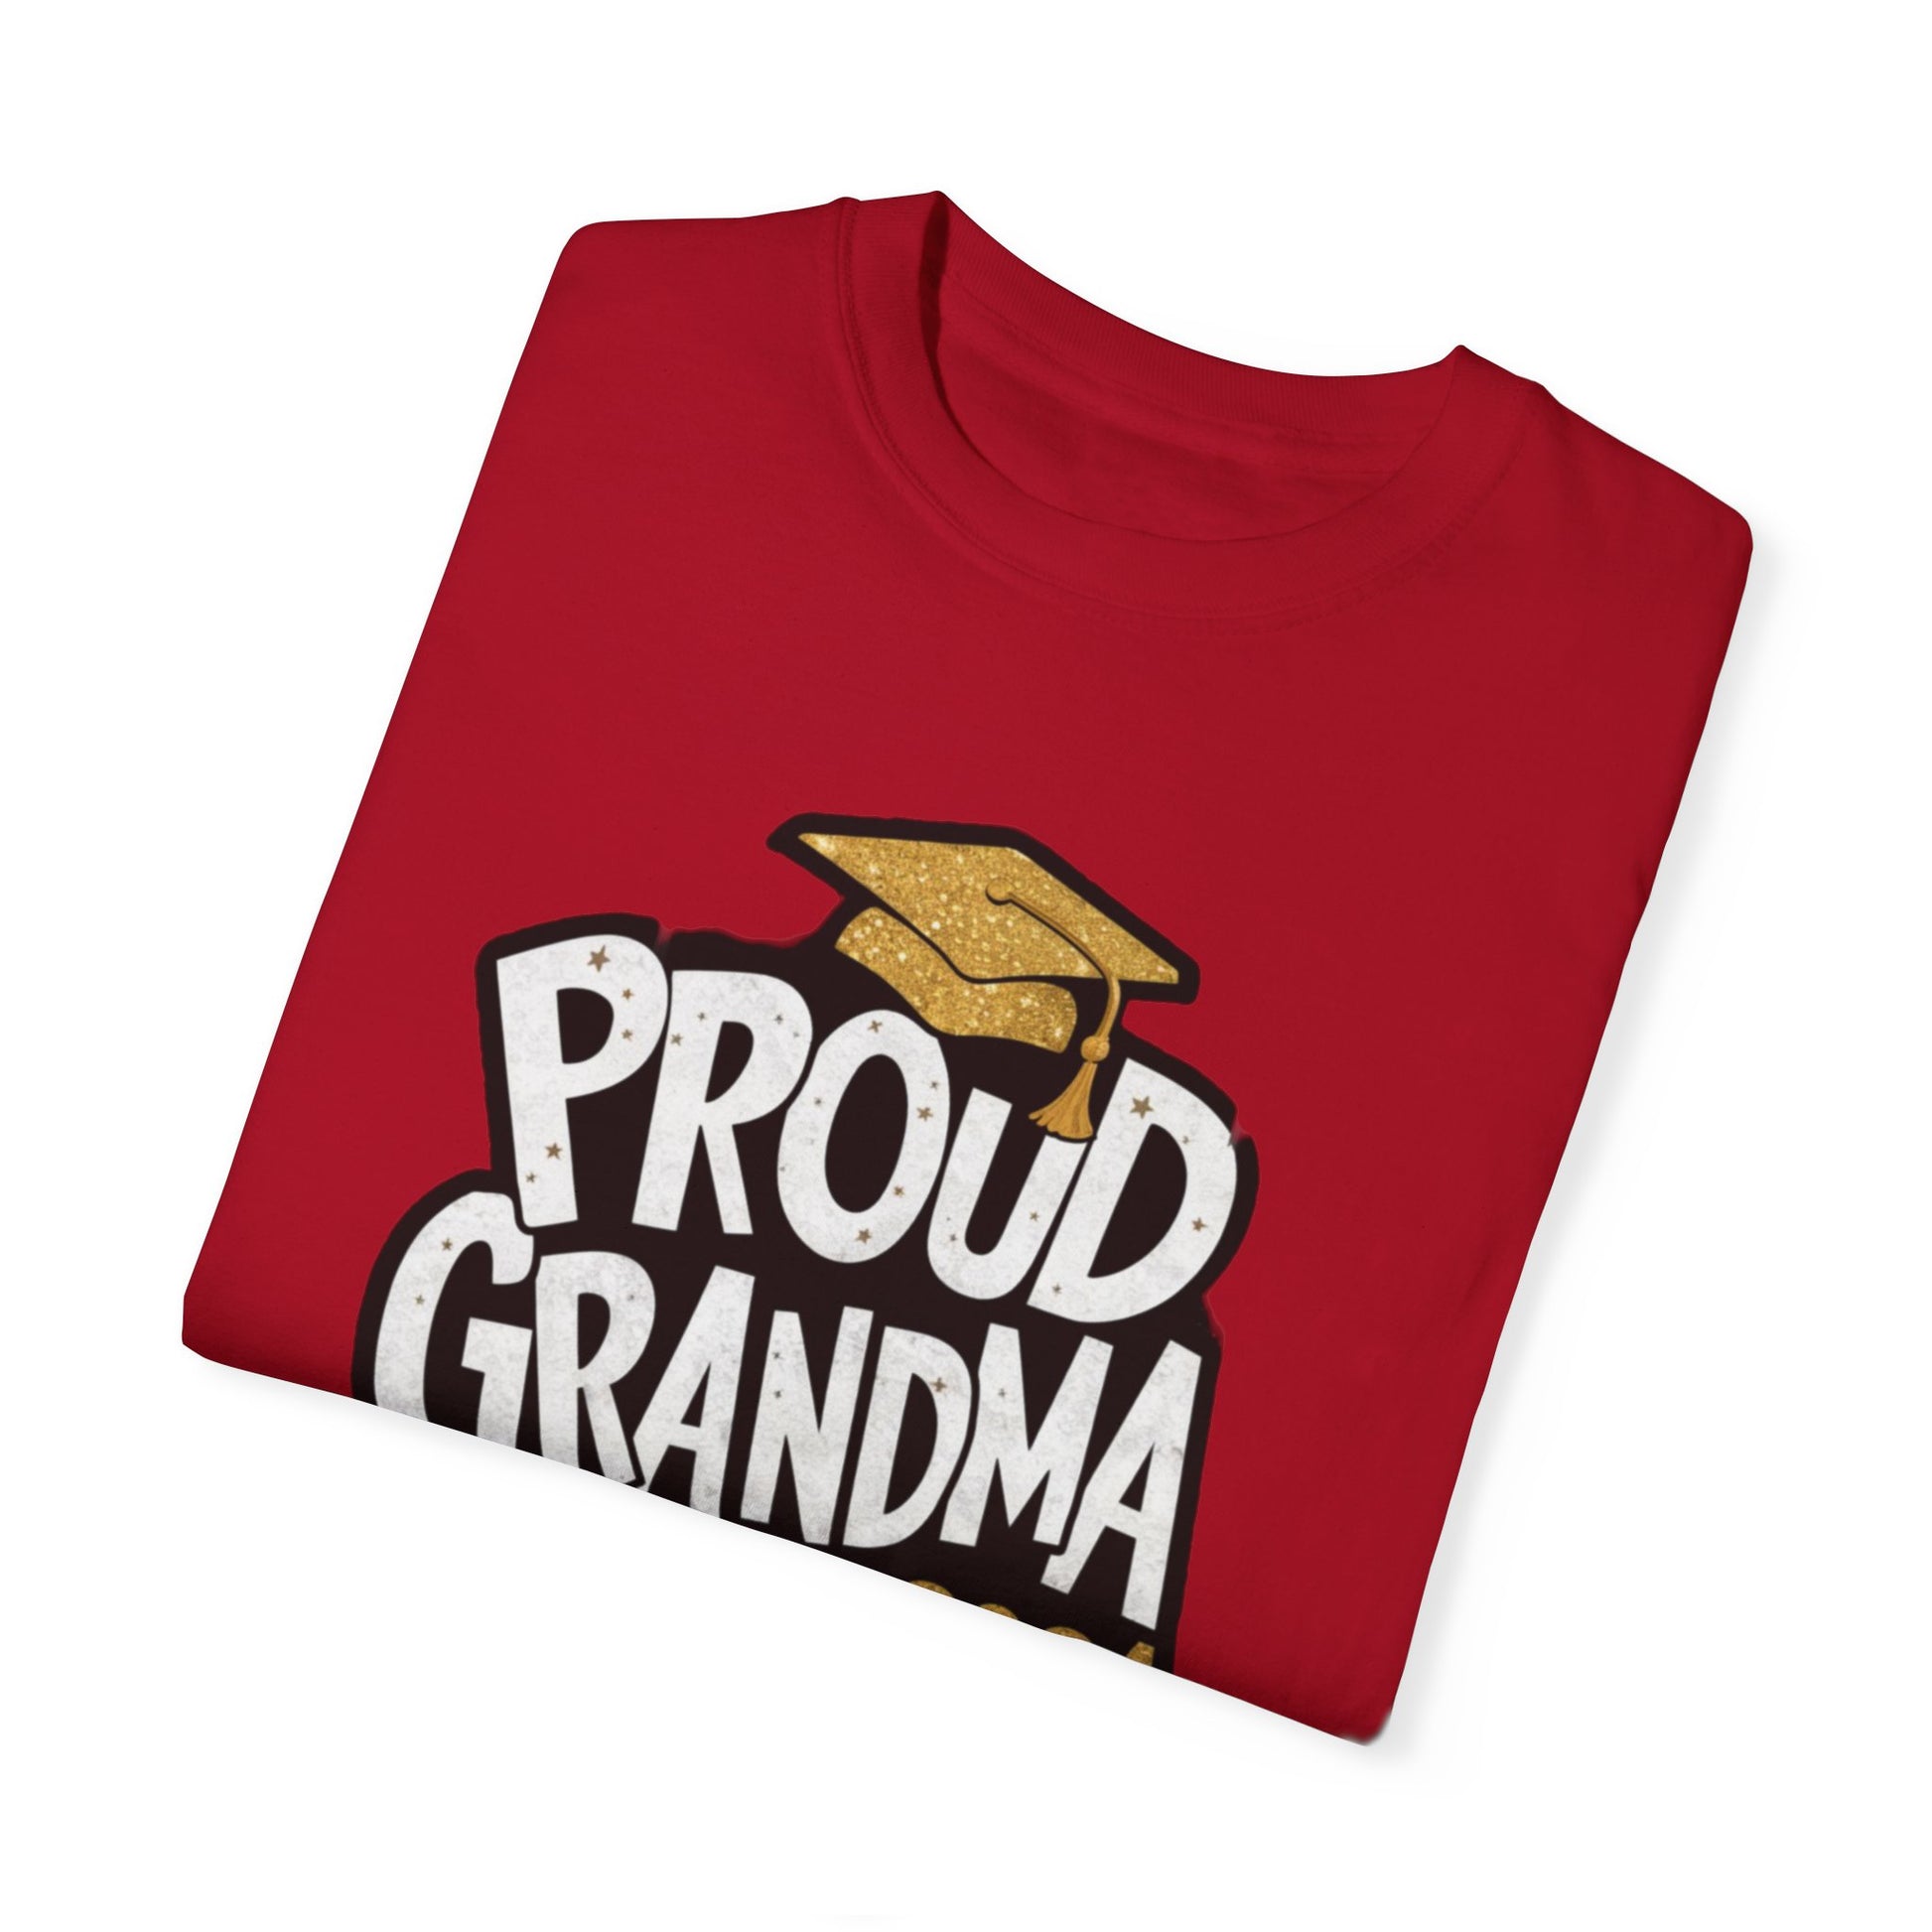 Proud of Grandma 2024 Graduate Unisex Garment-dyed T-shirt Cotton Funny Humorous Graphic Soft Premium Unisex Men Women Red T-shirt Birthday Gift-20